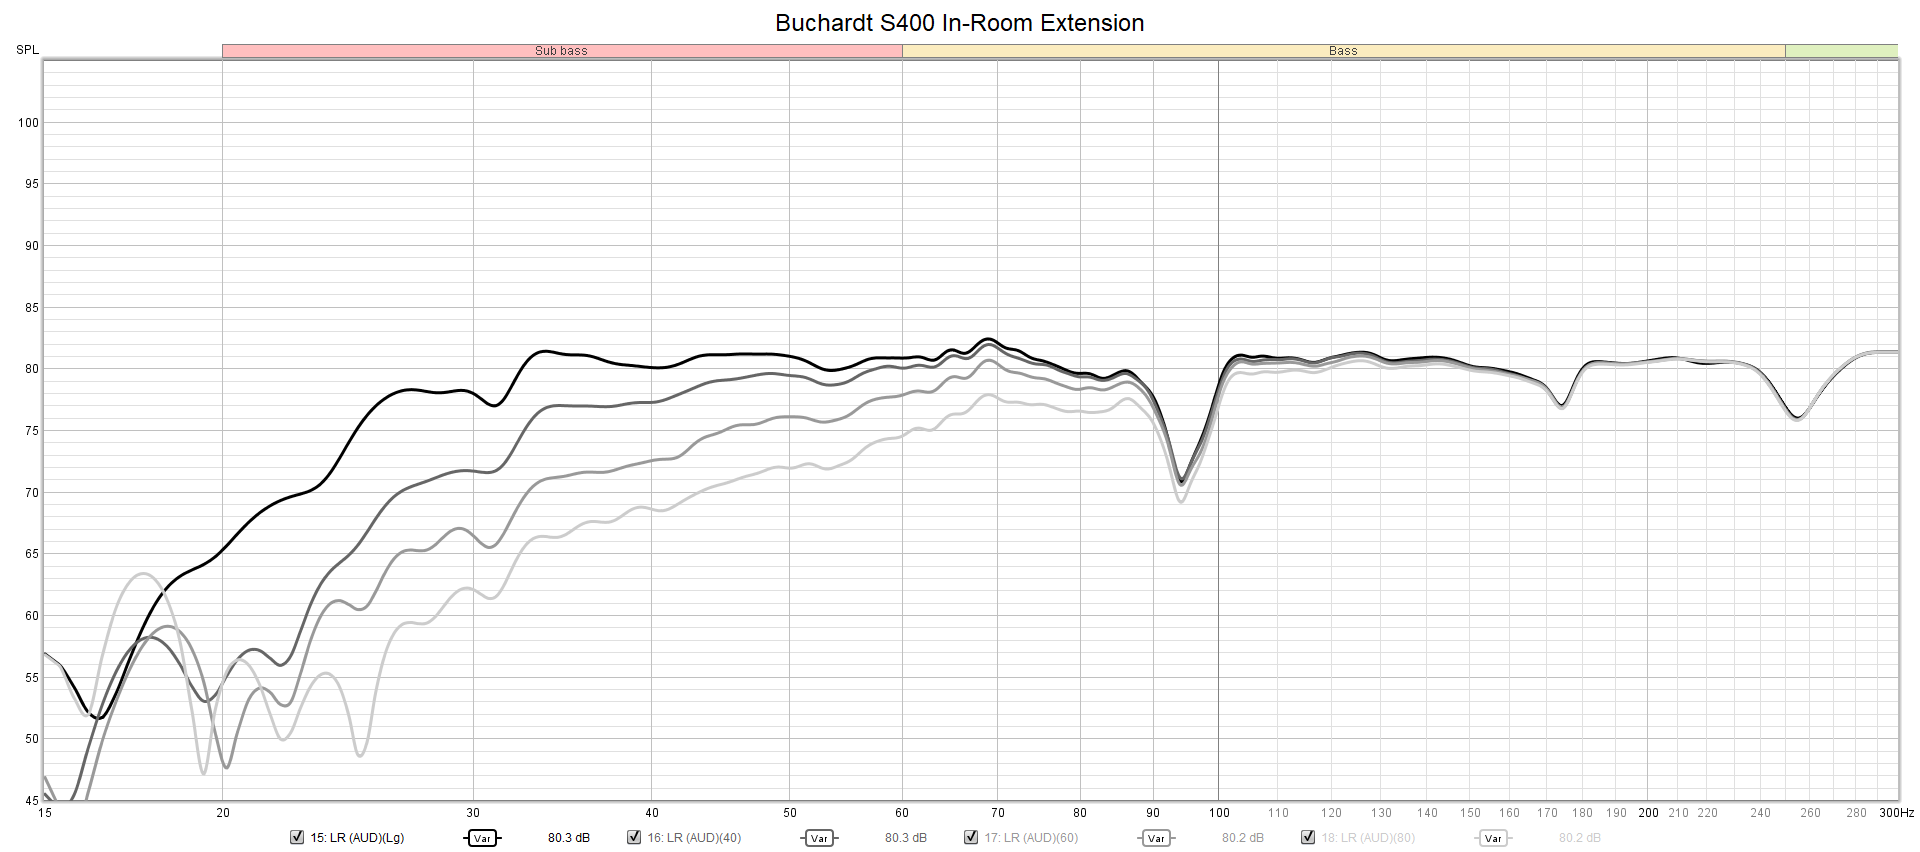 Buchardt S400 In-Room Extension.png